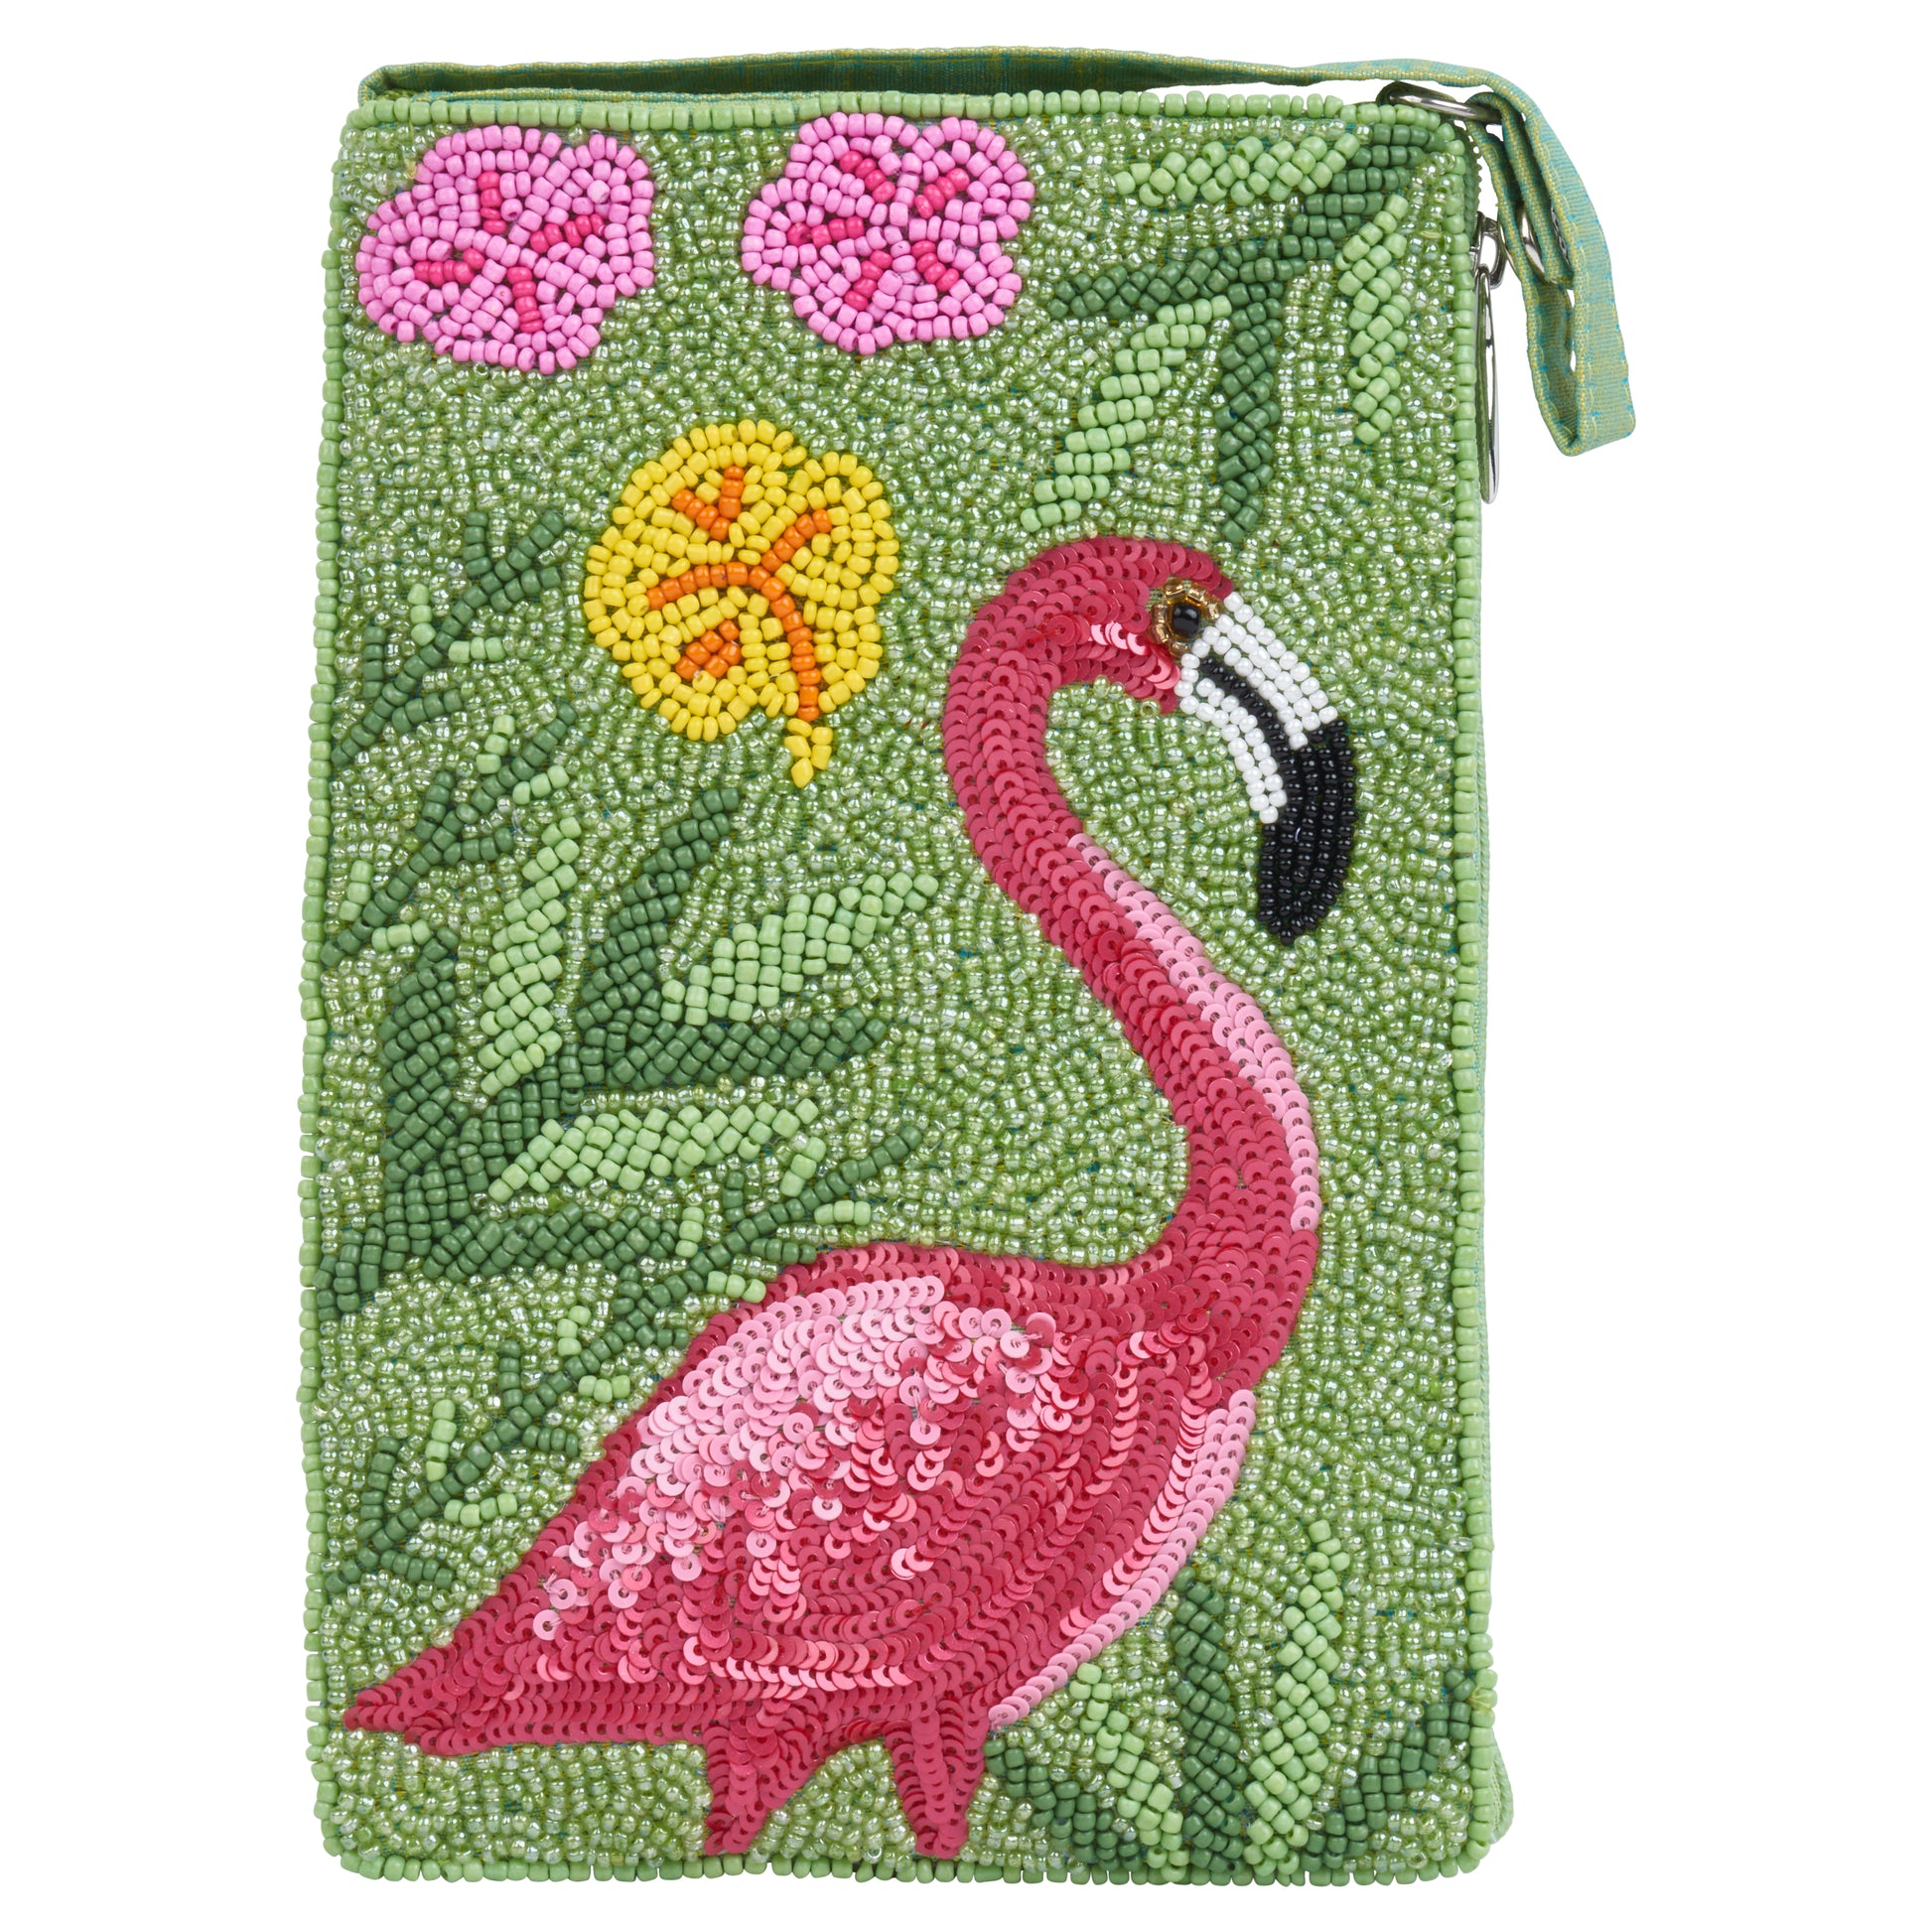 Kate Spade By The Pool Flamingo Pippa Leather Bag & Flamingo Coin Purse  PXRU8940 | eBay